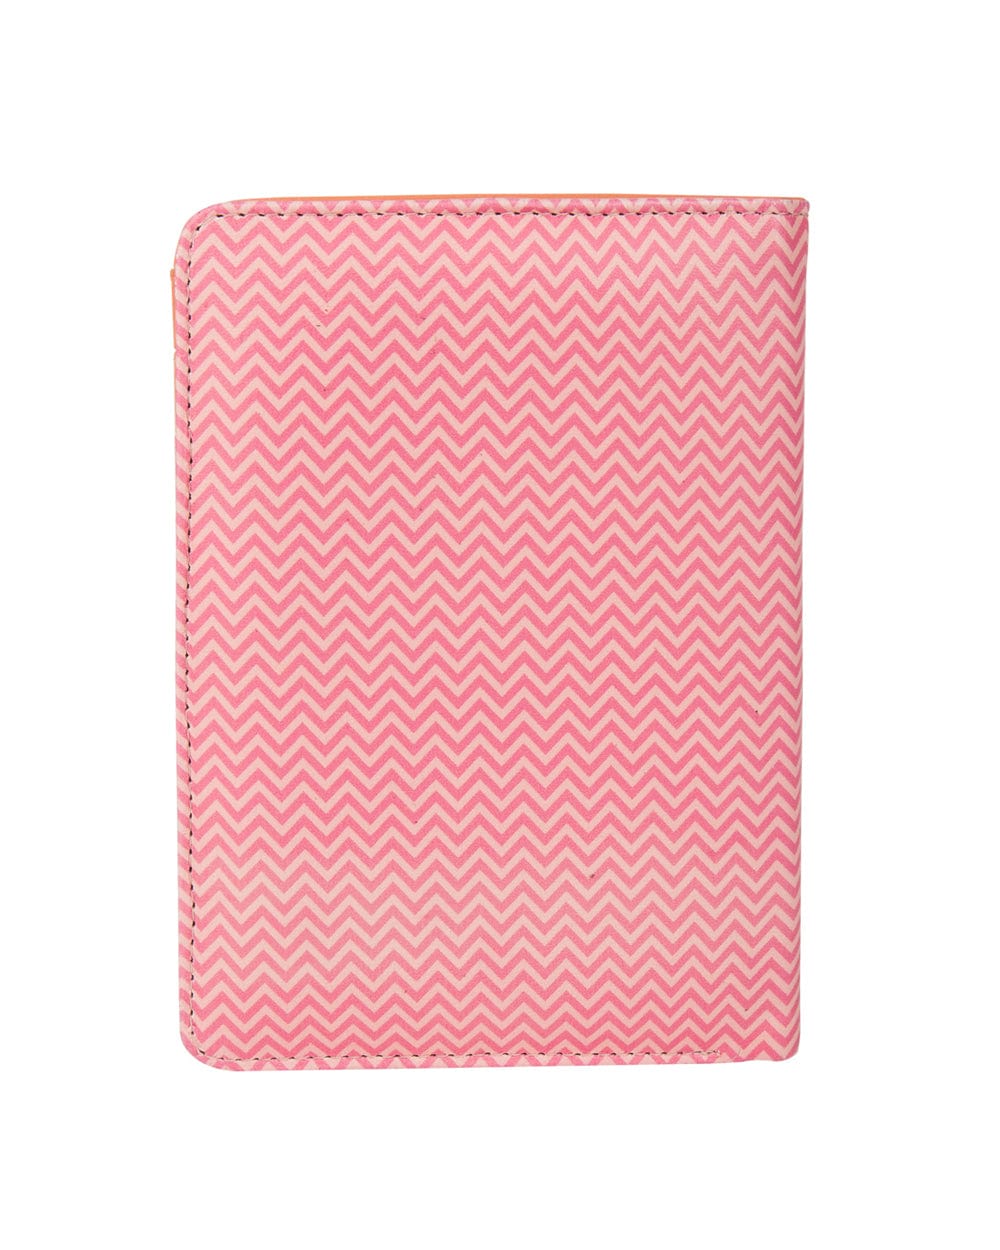 Chumbak India Potpourri Passport Holder - Pink